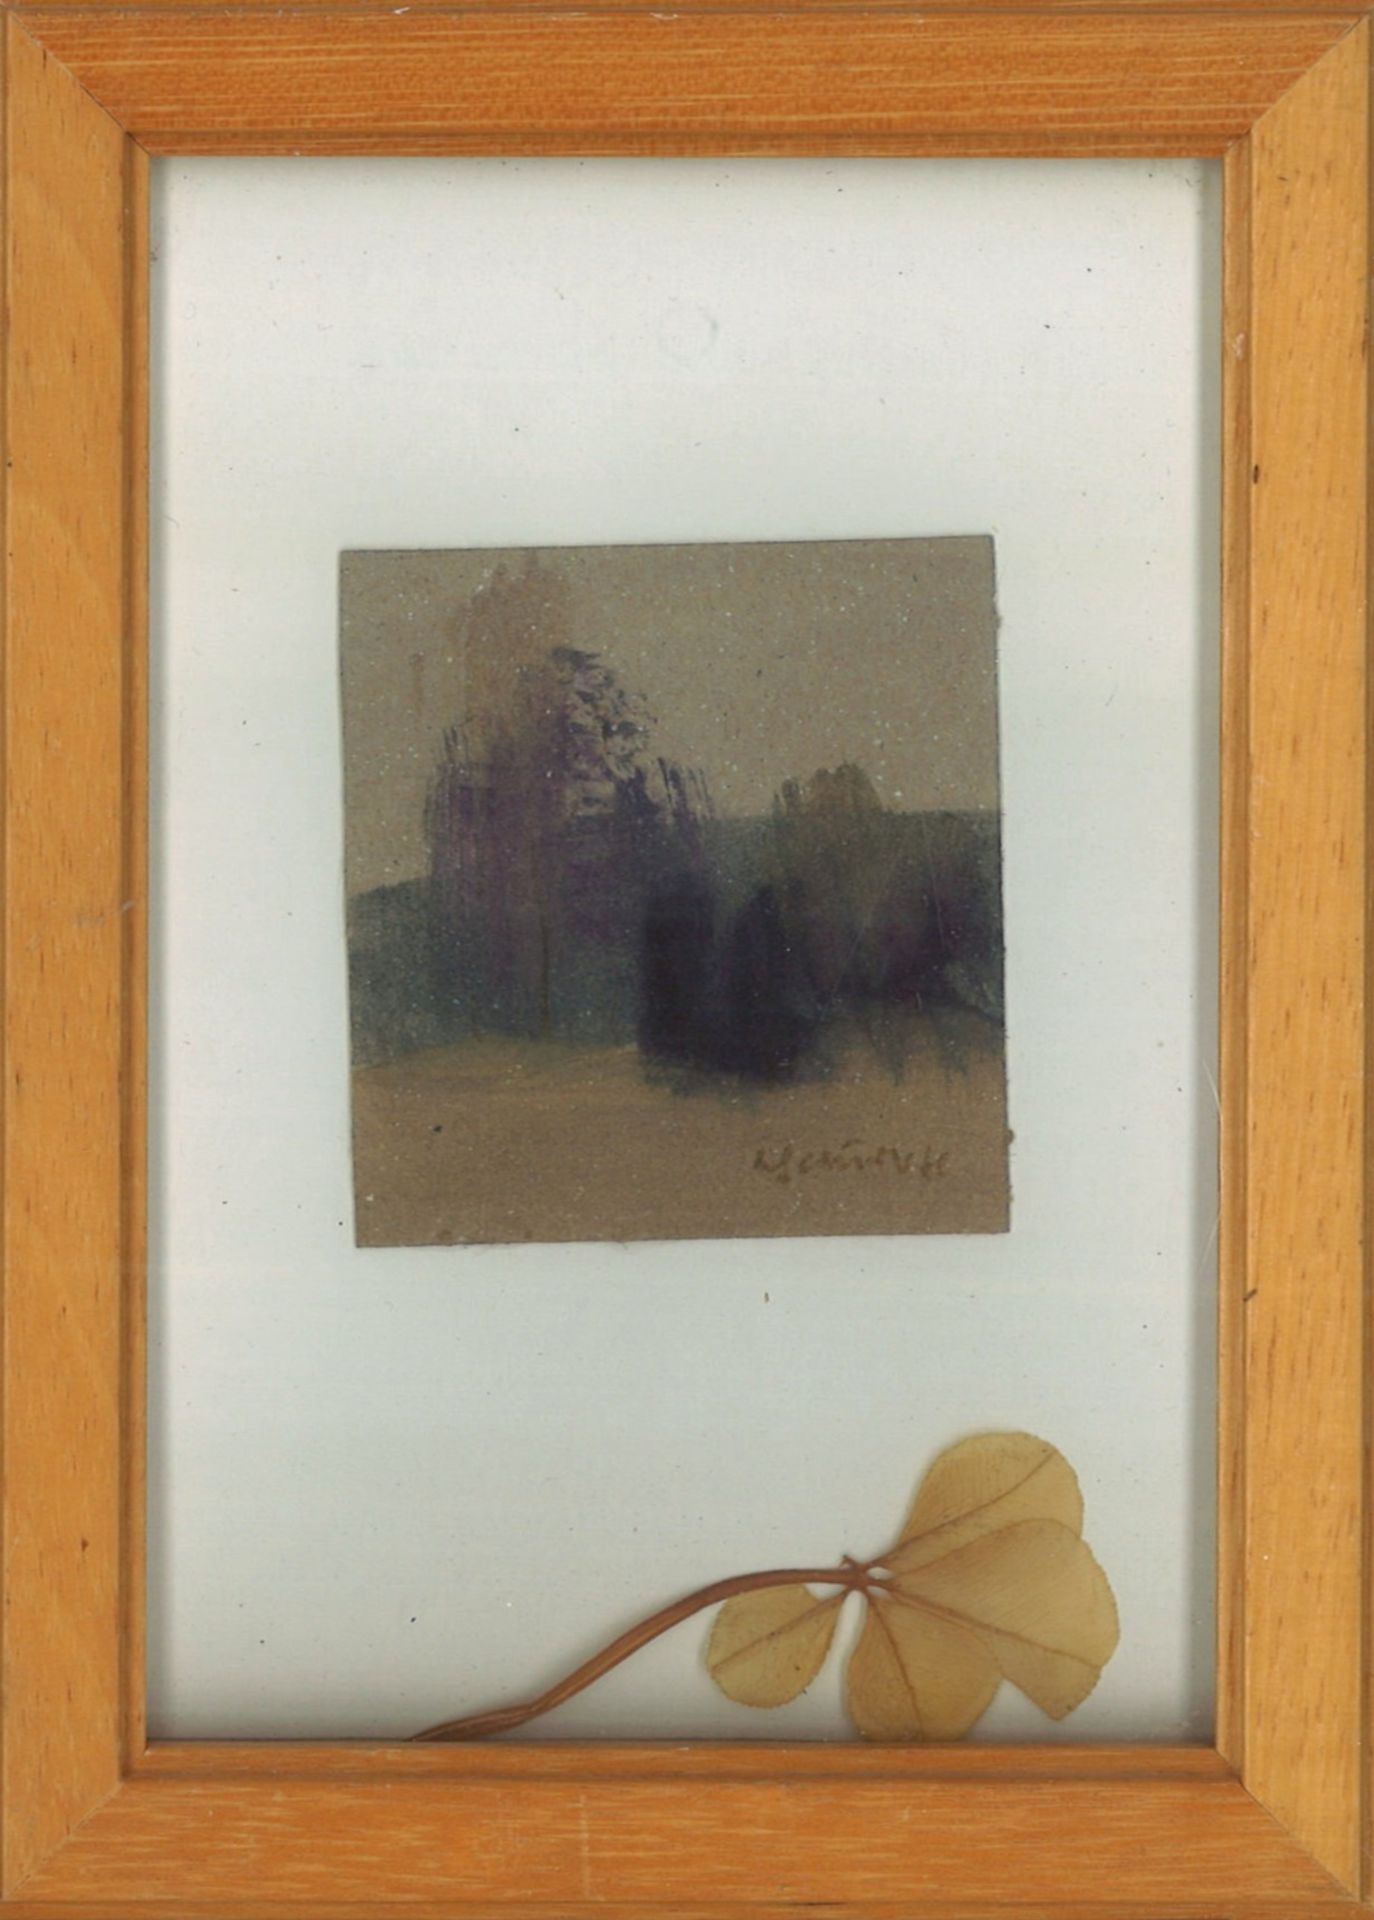 Addi SCHAURER (1912-1990) Aquarell "Landschaft" hinter Glas gerahmt, rechts unten Signatur Schaurer.